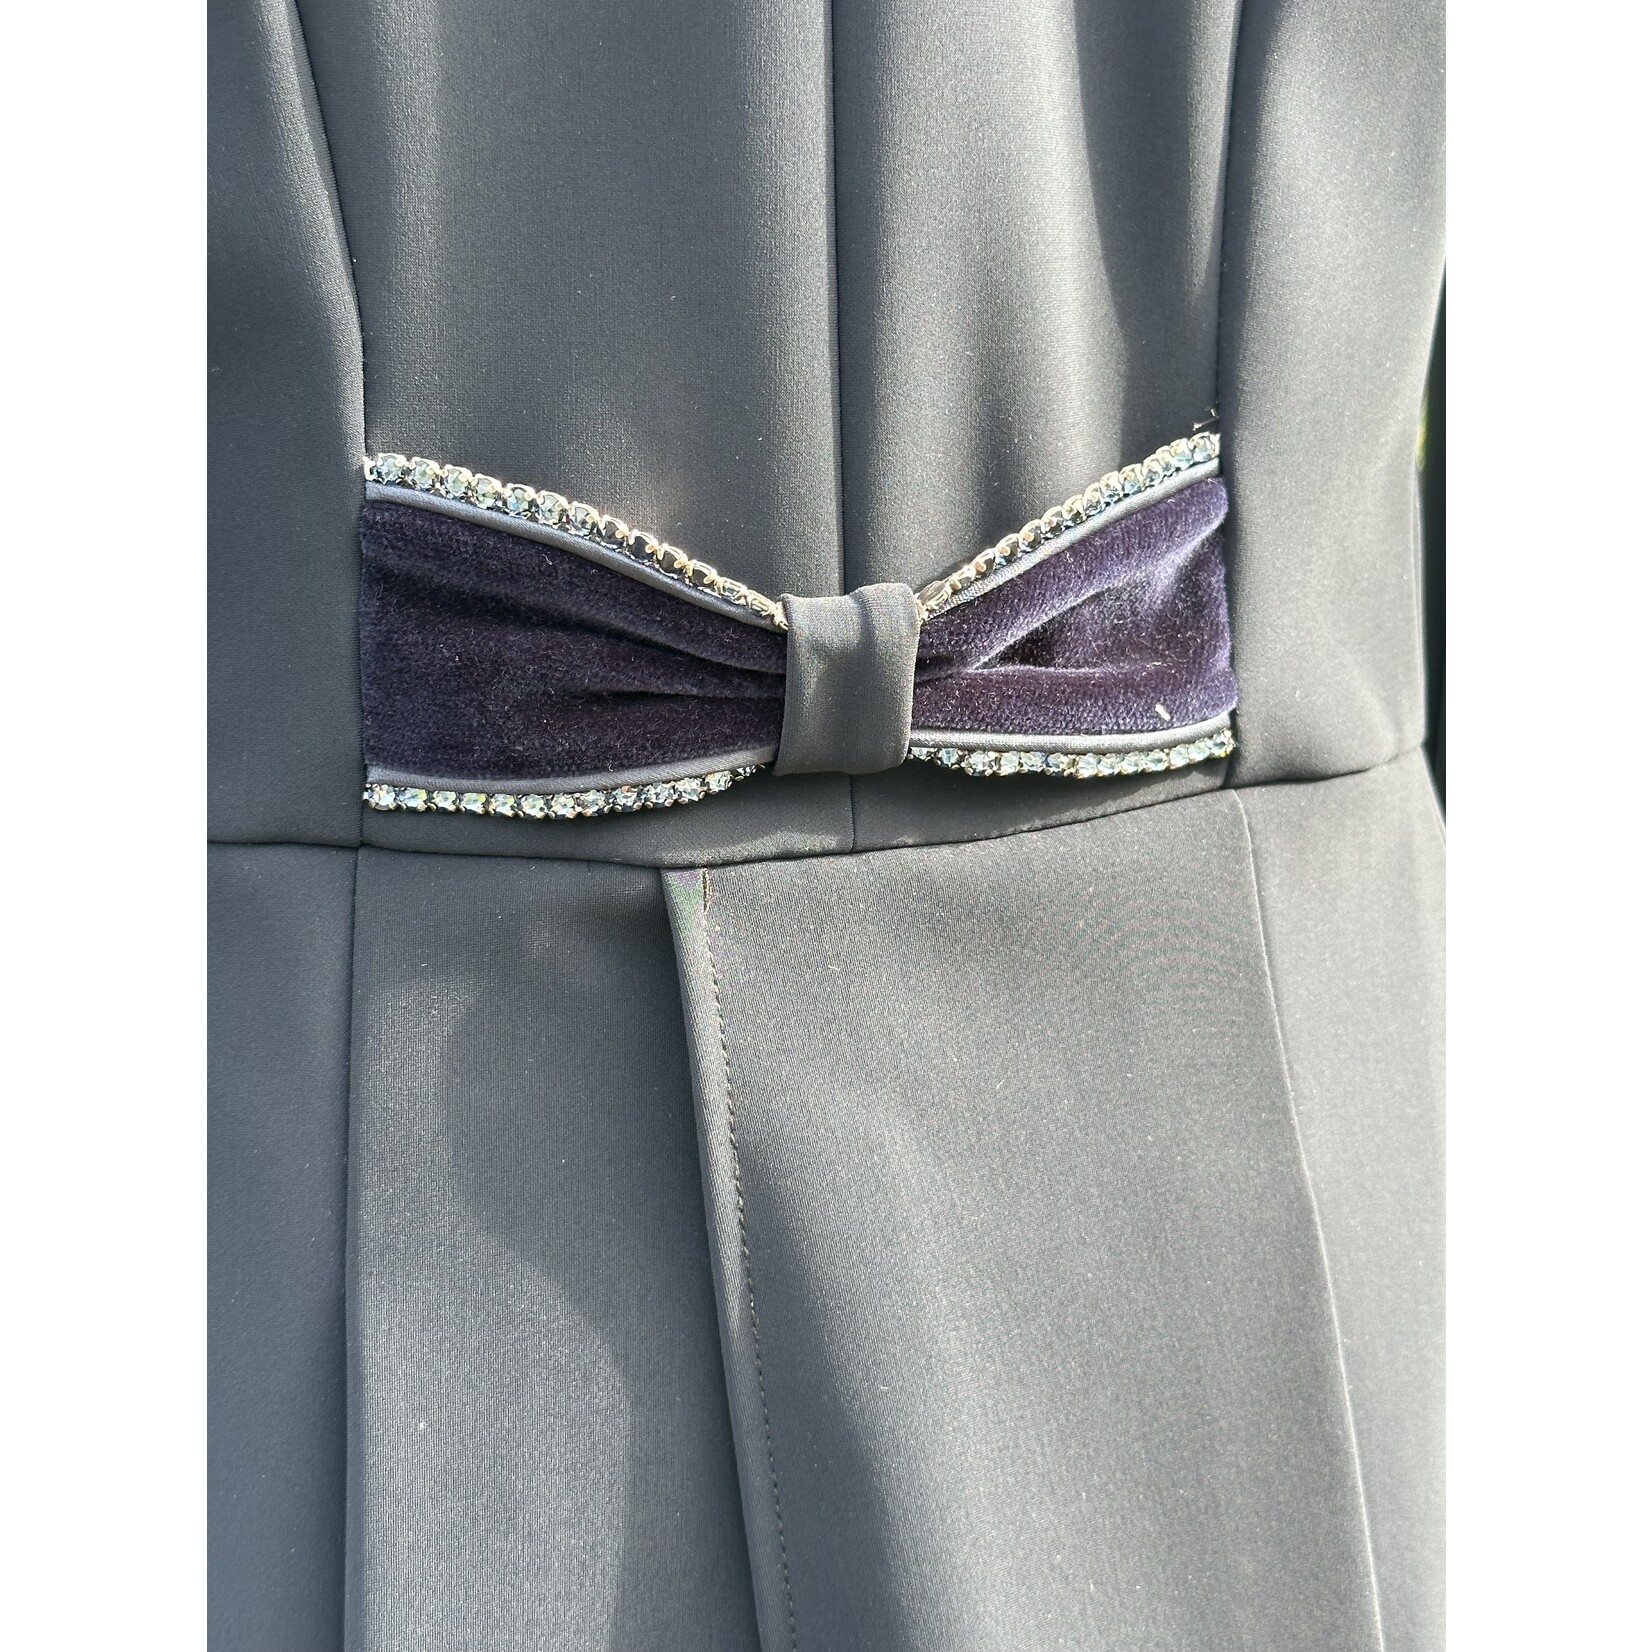 Lamantia Couture Nederland DEMO Lamantia Couture slipjas donker blauw diamond collectie ( Maat 38)